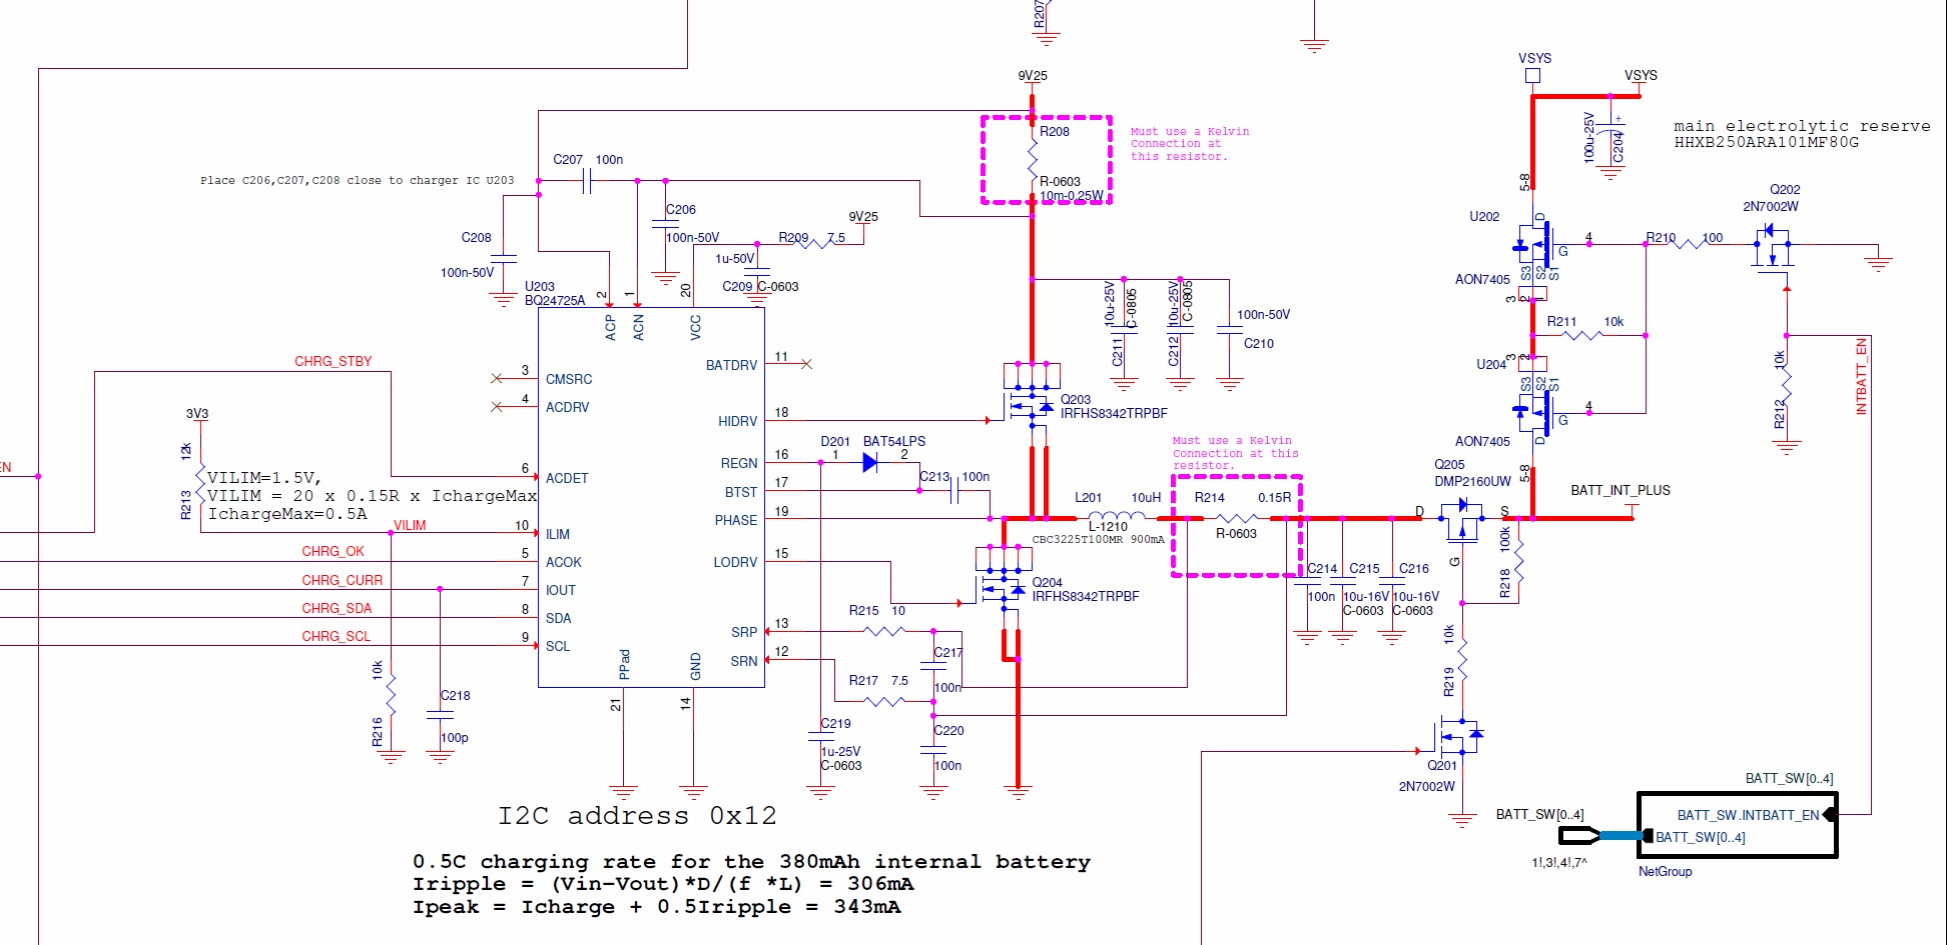 BQ24725A: BQ24725A sense resistor and register setting - Power 